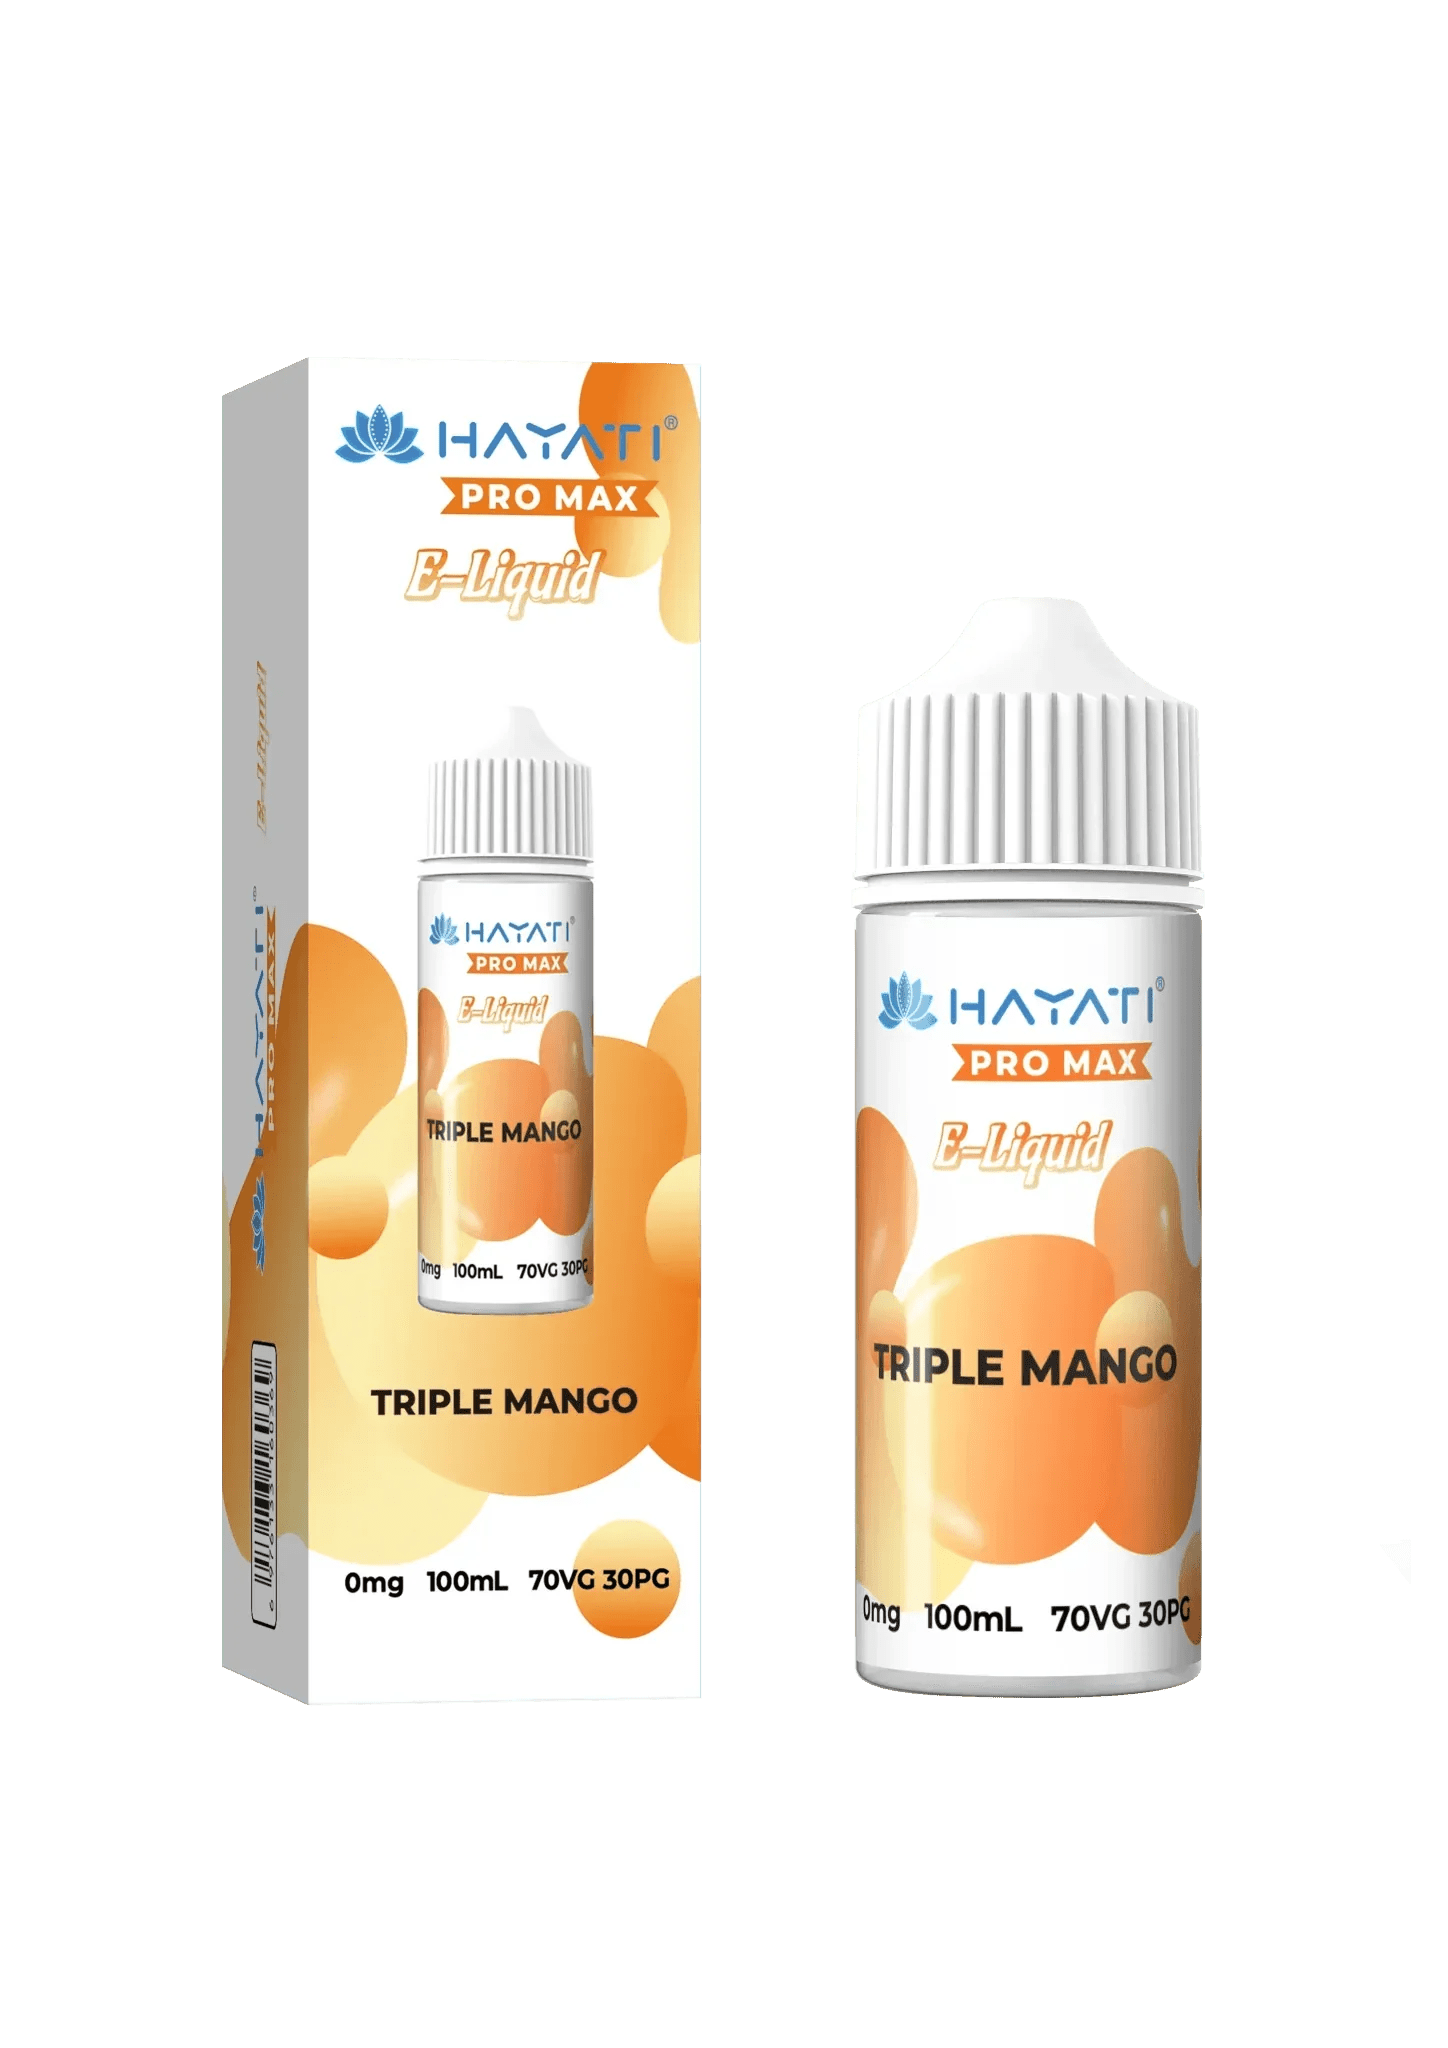 Hayati Pro Max E-liquid 100ml - Wolfvapes.co.uk-Triple Mango